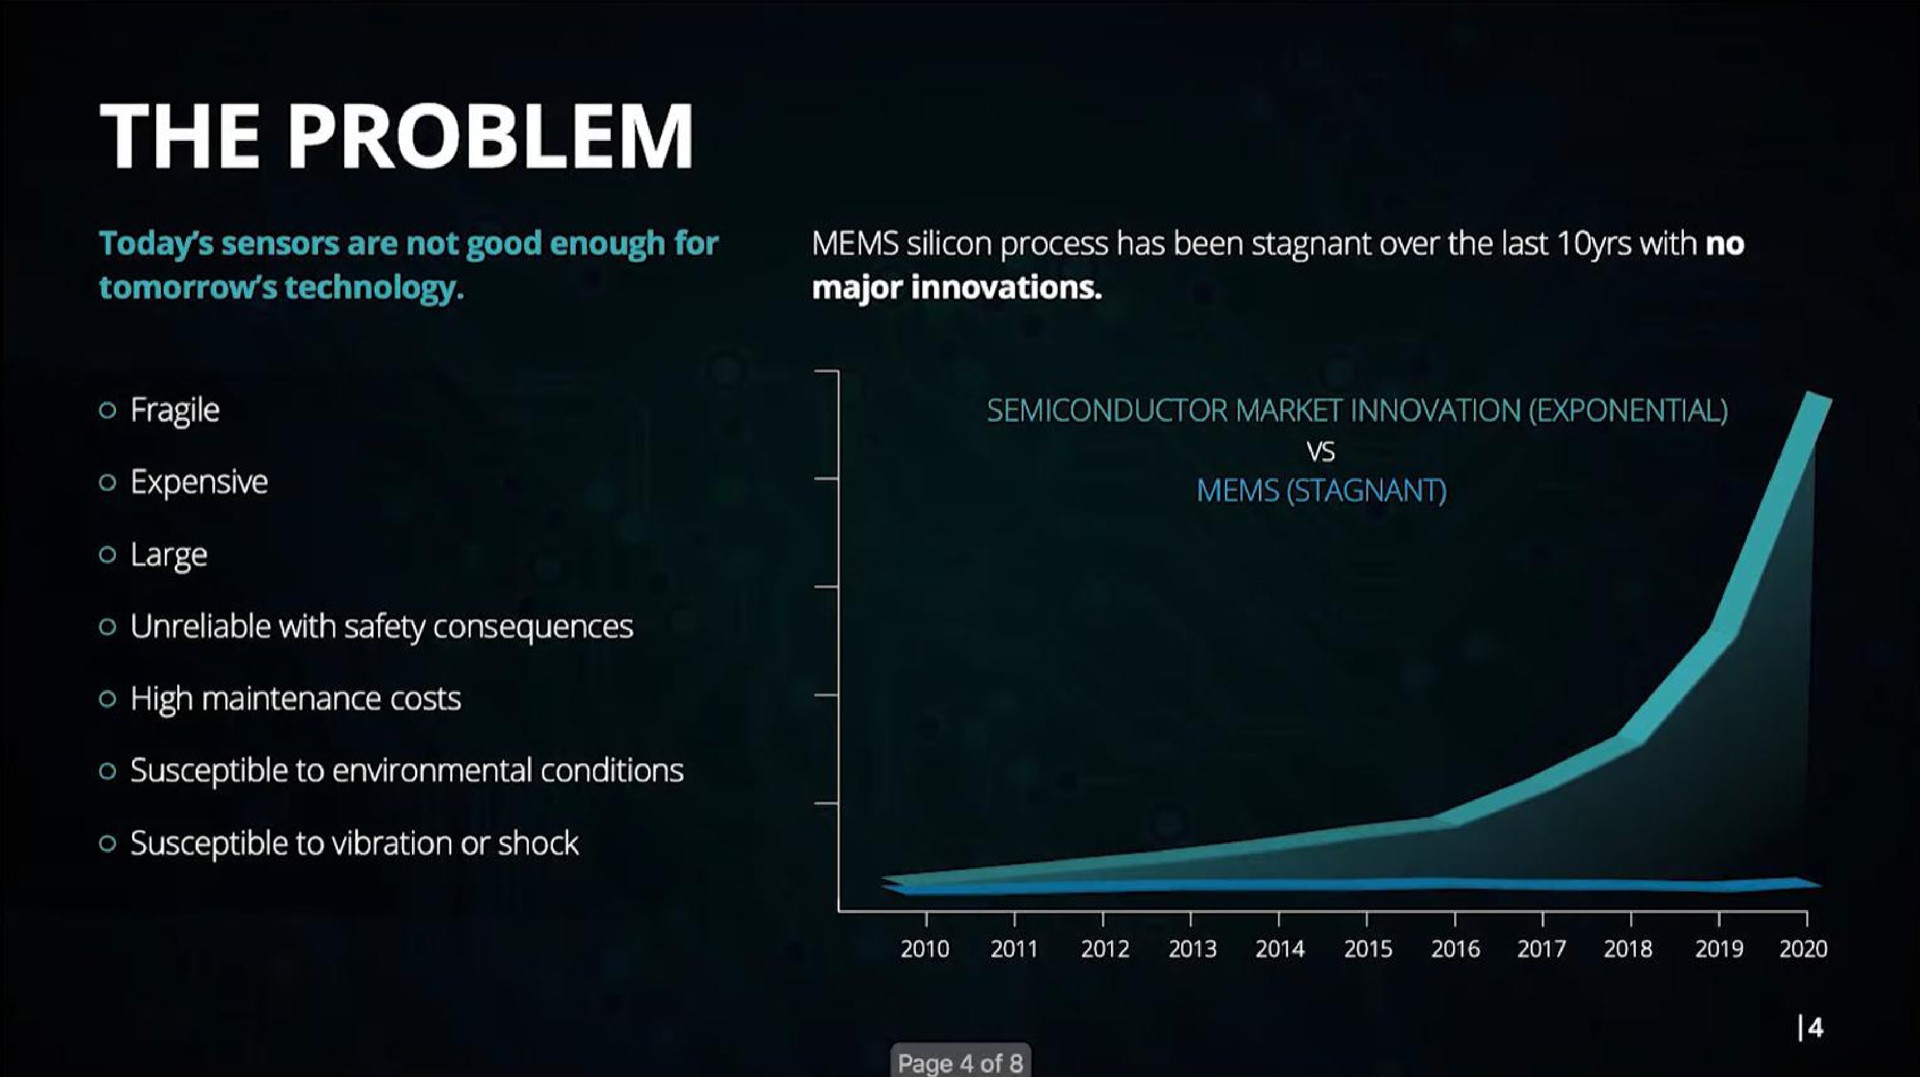 dis semiconductor market innovation exponential mems stagnant | Omnitron Sensors